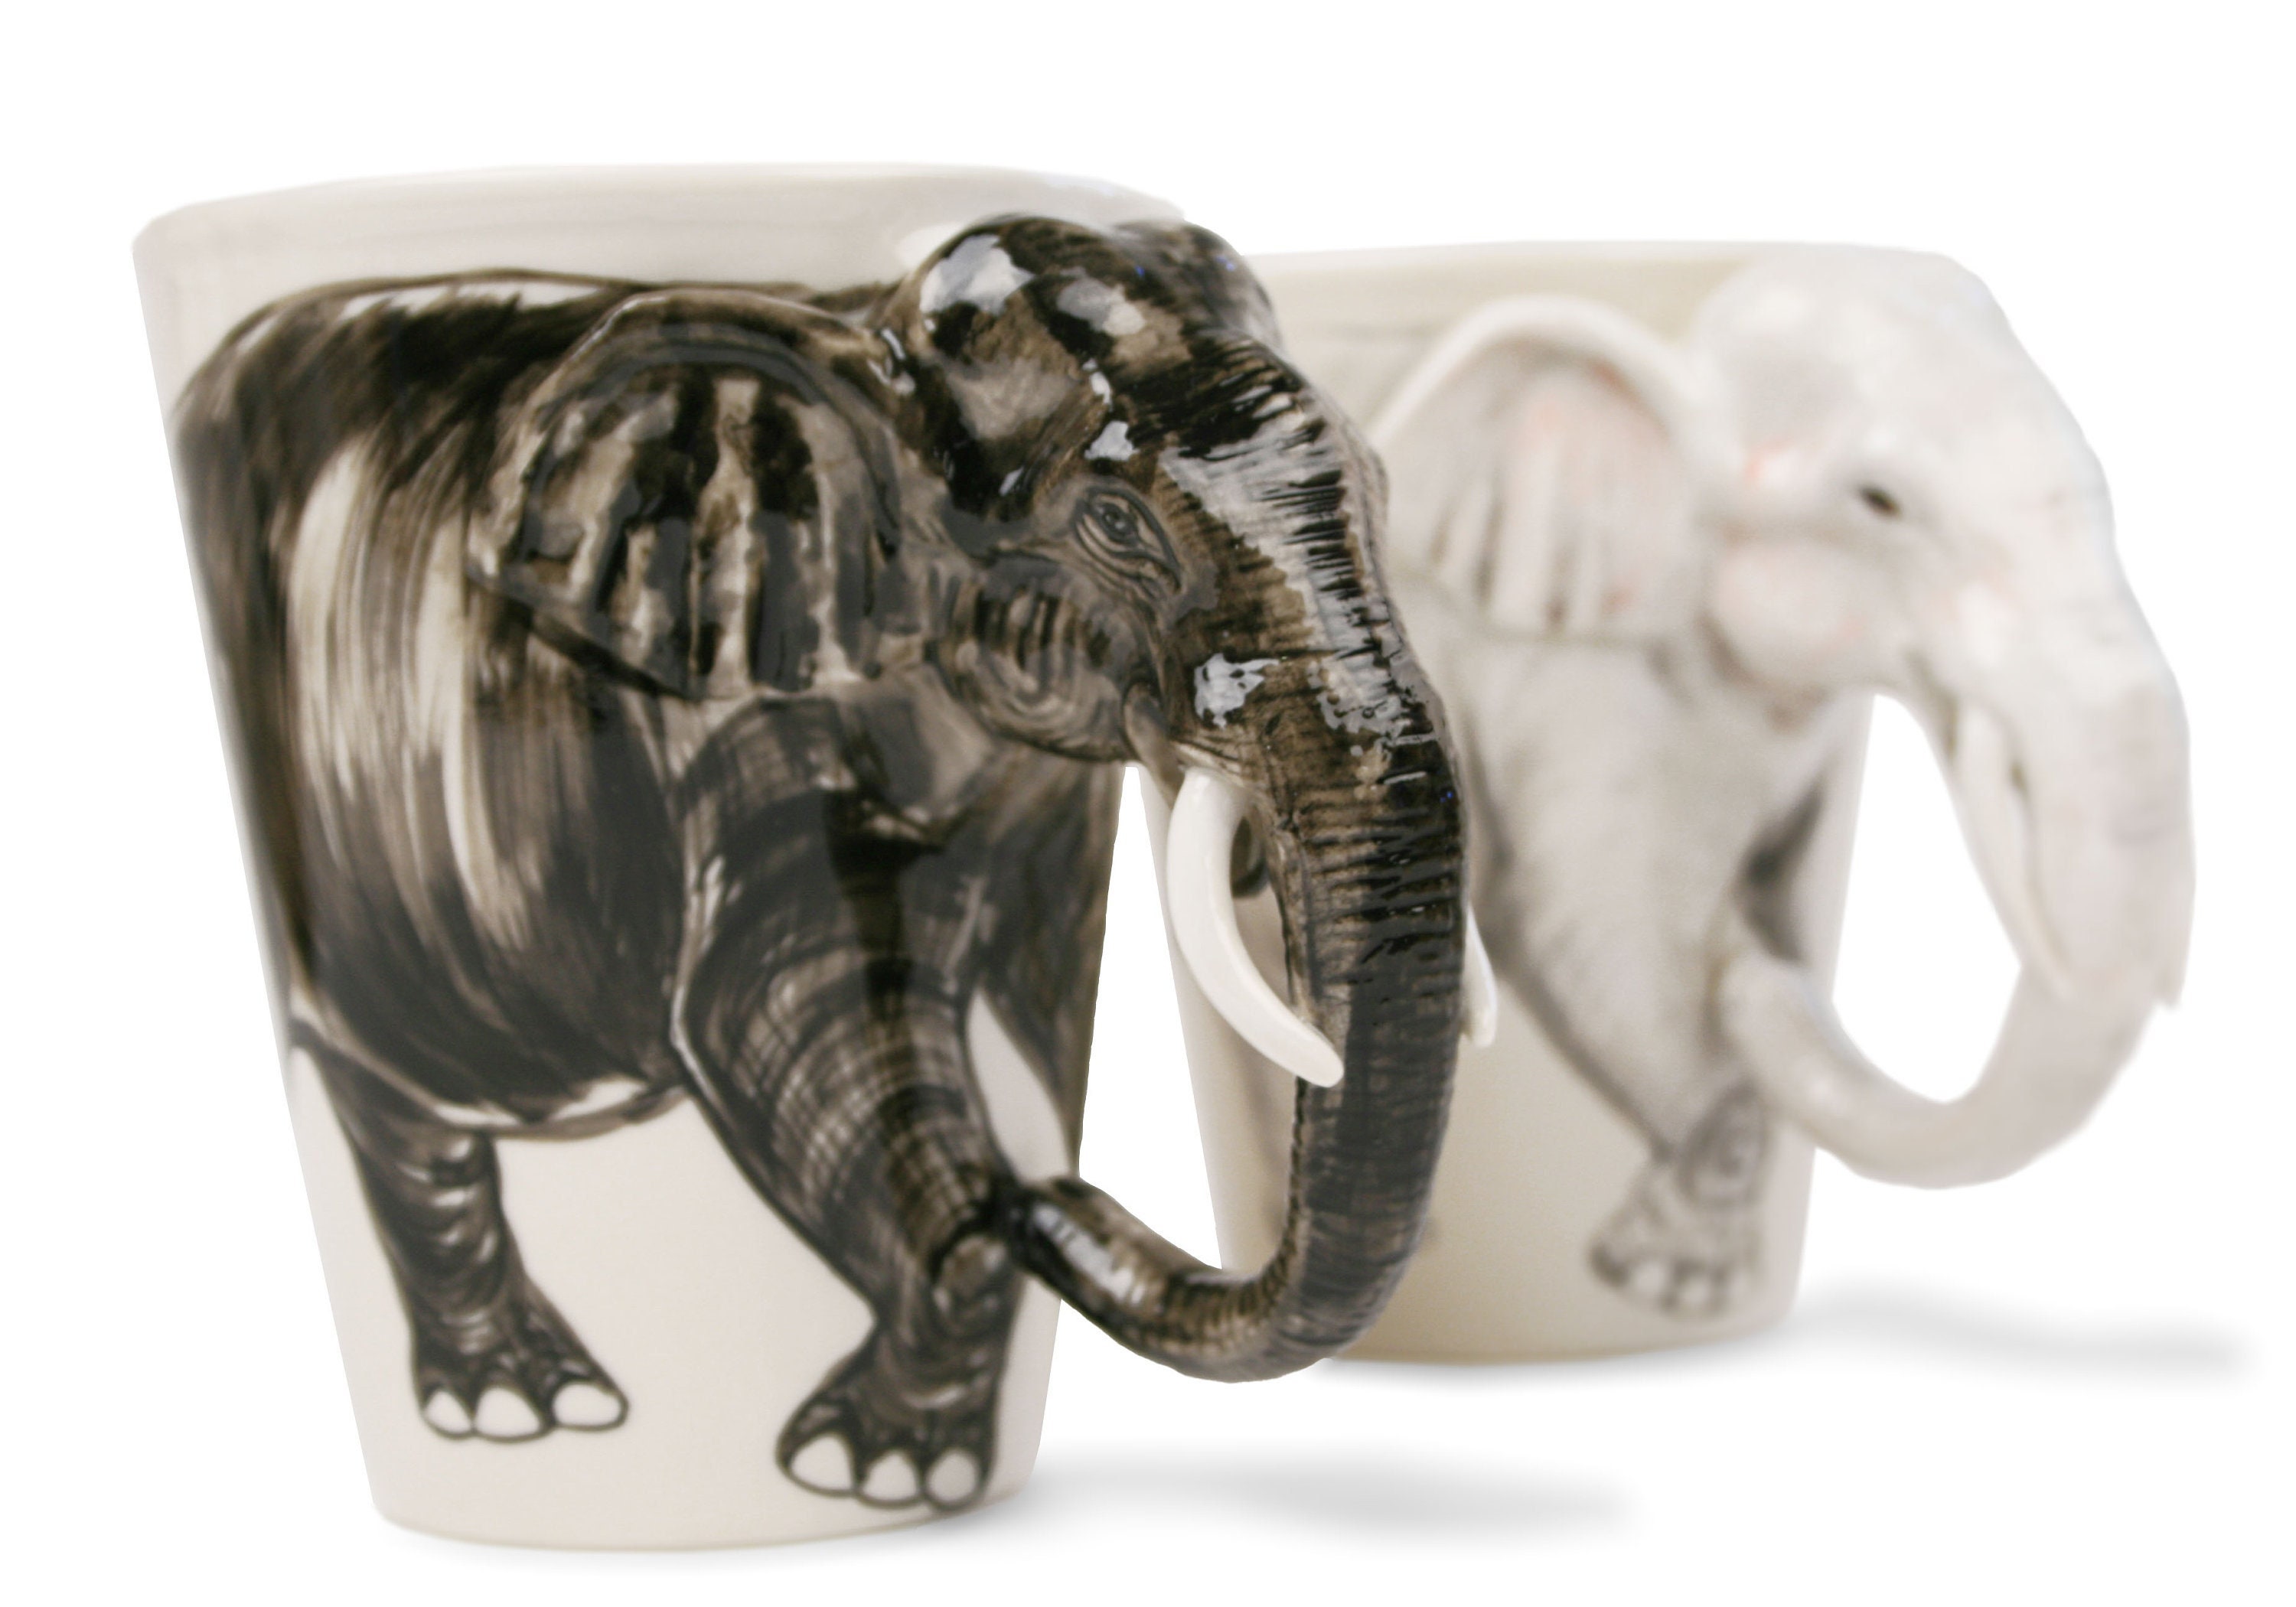 Funny White Elephant Gifts Coffee Mug, 11 Oz. White Elephant Gifts